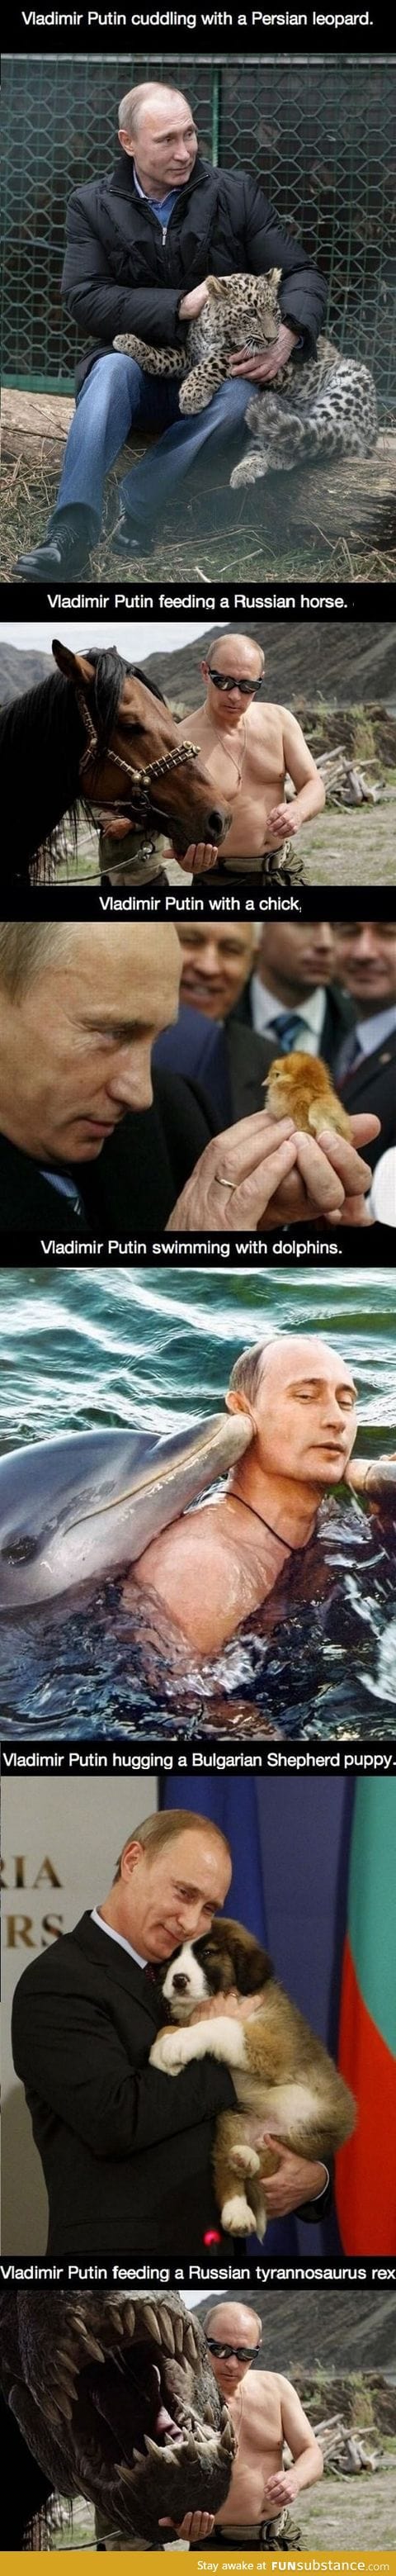 Putin's everyday life